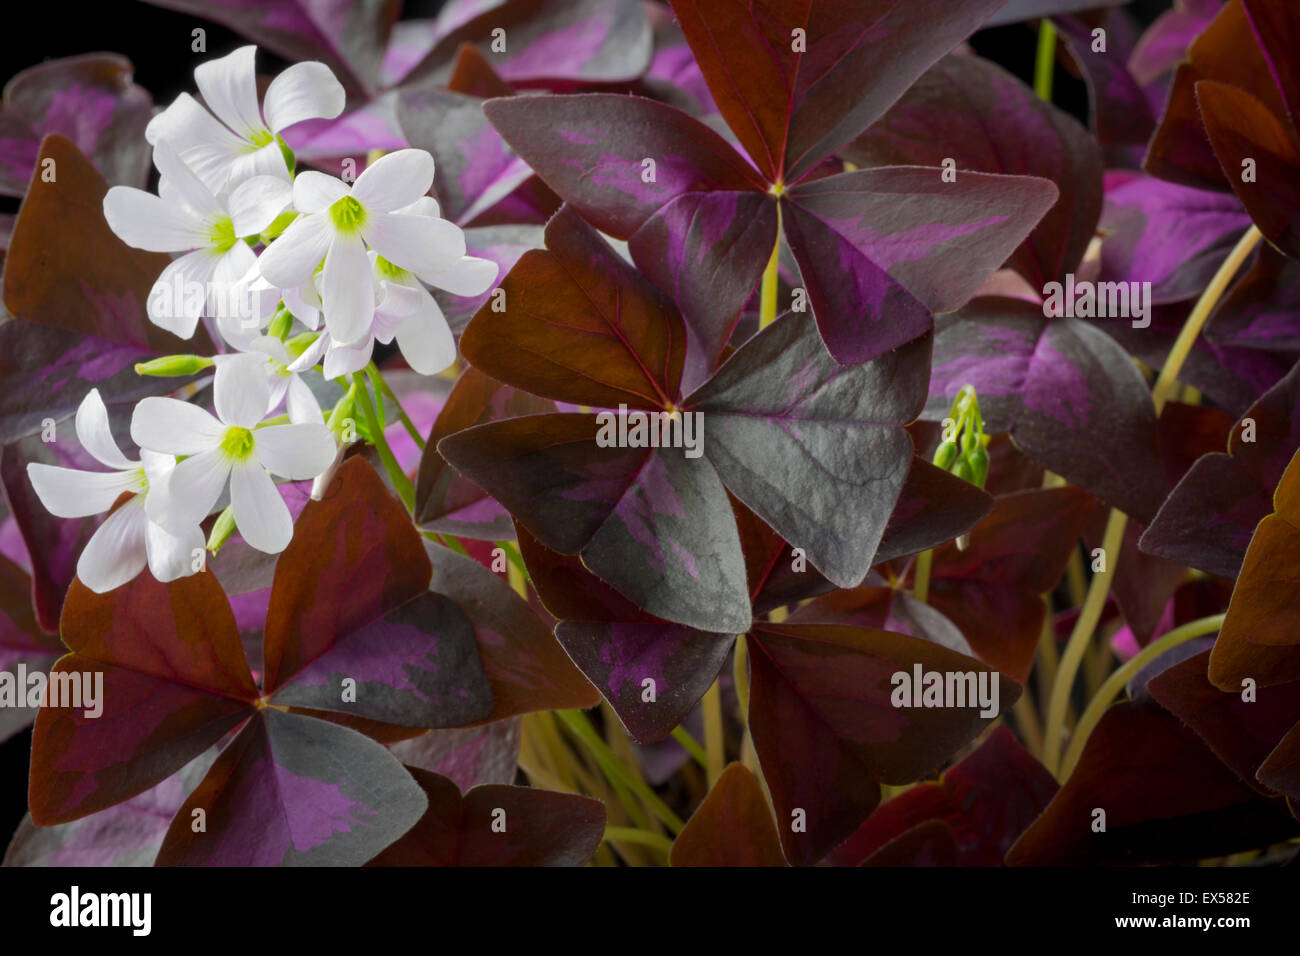 LEAFED BRONZATO OXALIS, fiori da giardino, Oxalis triangularis in fiore. Foto Stock